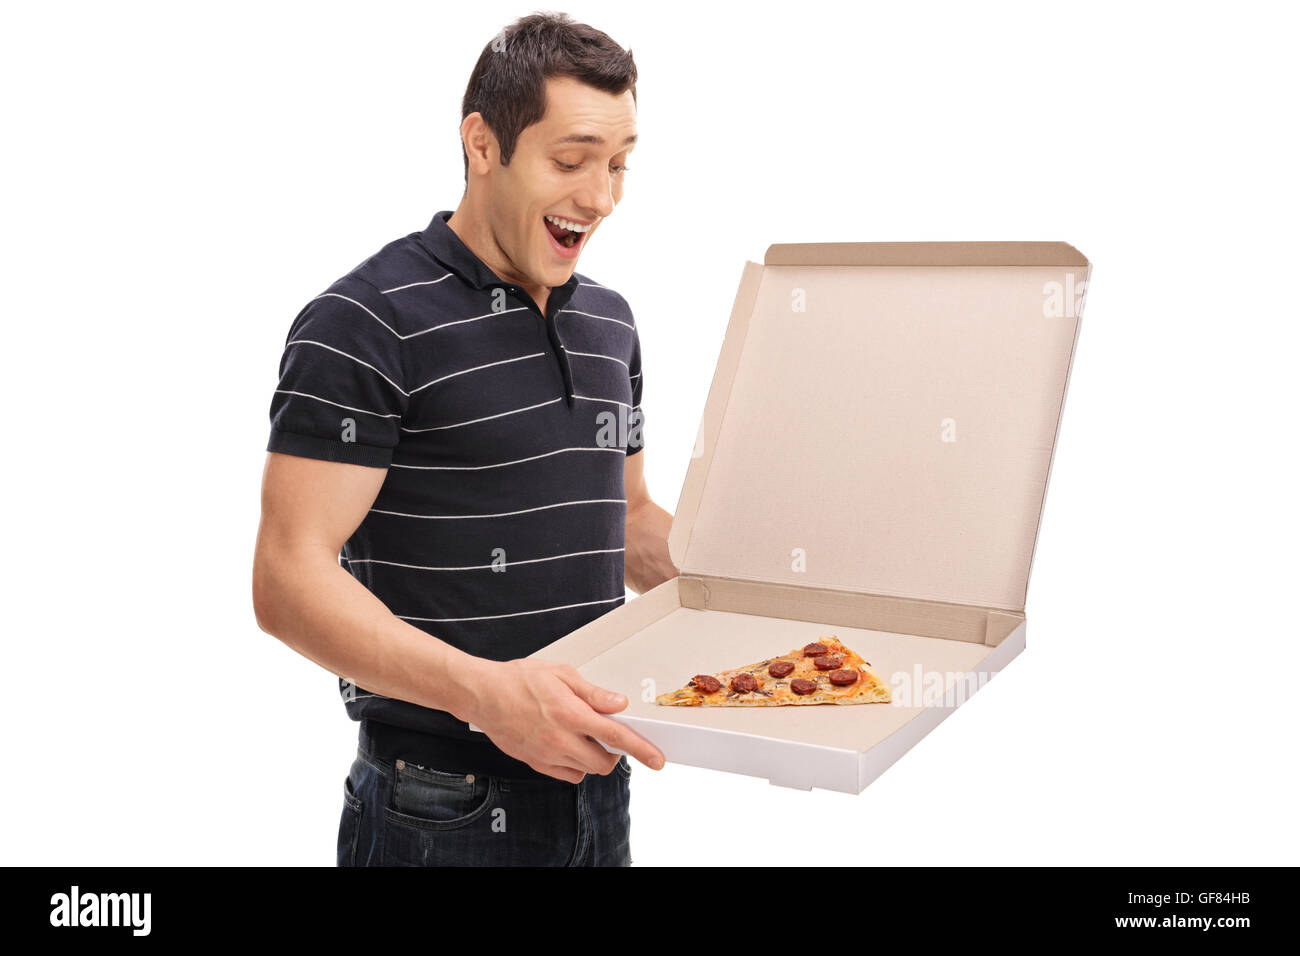 Leftover pizza in box stock image. Image of fast, breakfast - 81766545